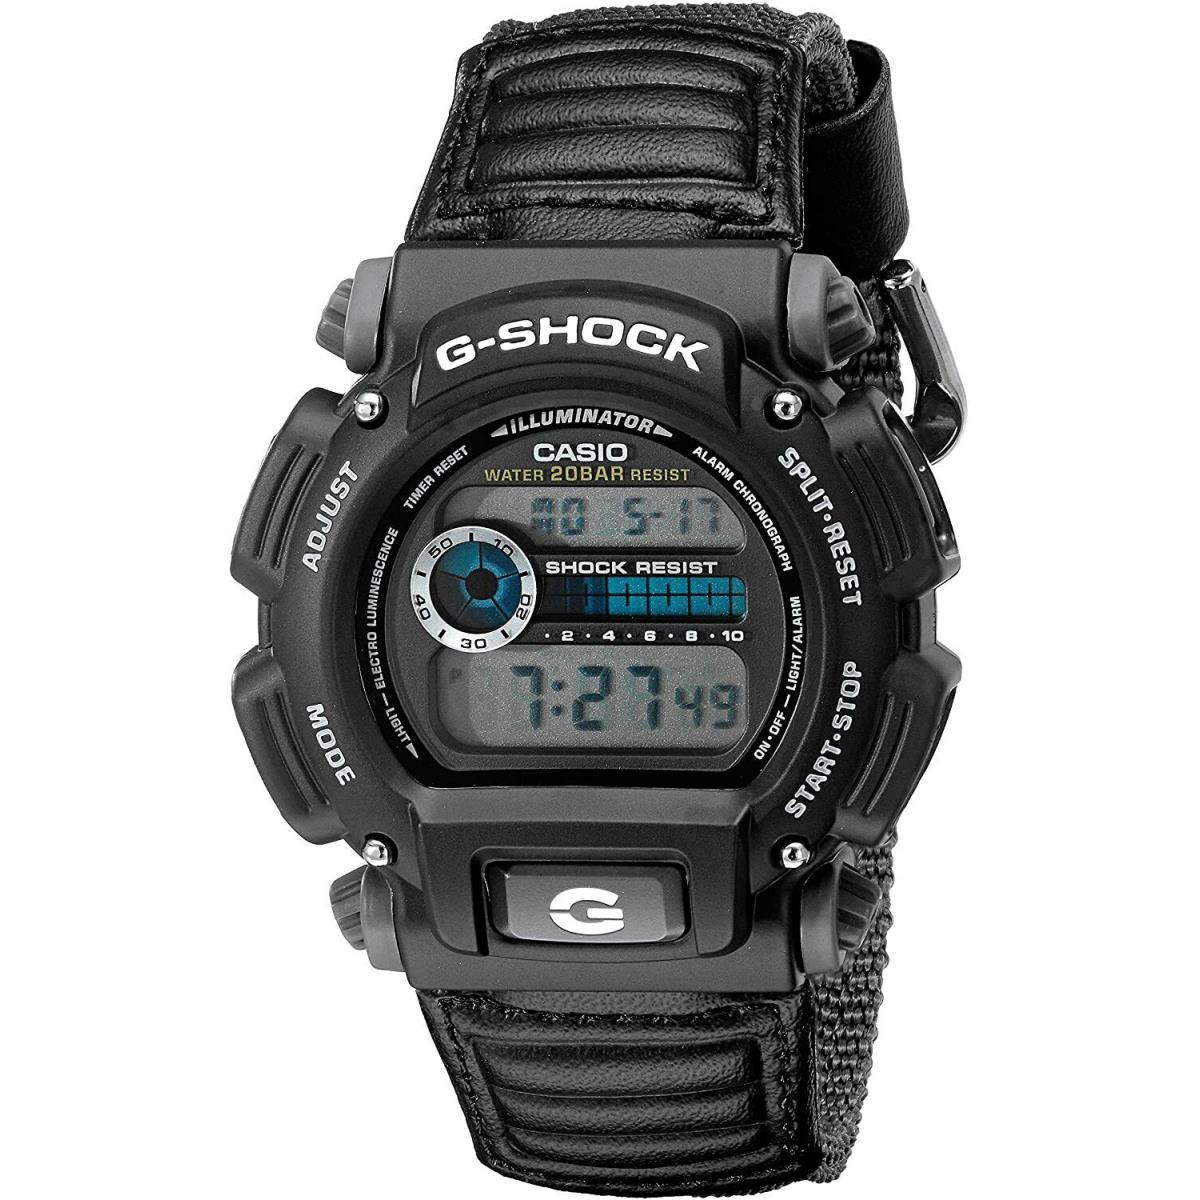 Casio DW9052V-1V G-shock Chronograph Watch Nylon Band Alarm 200 Meter WR